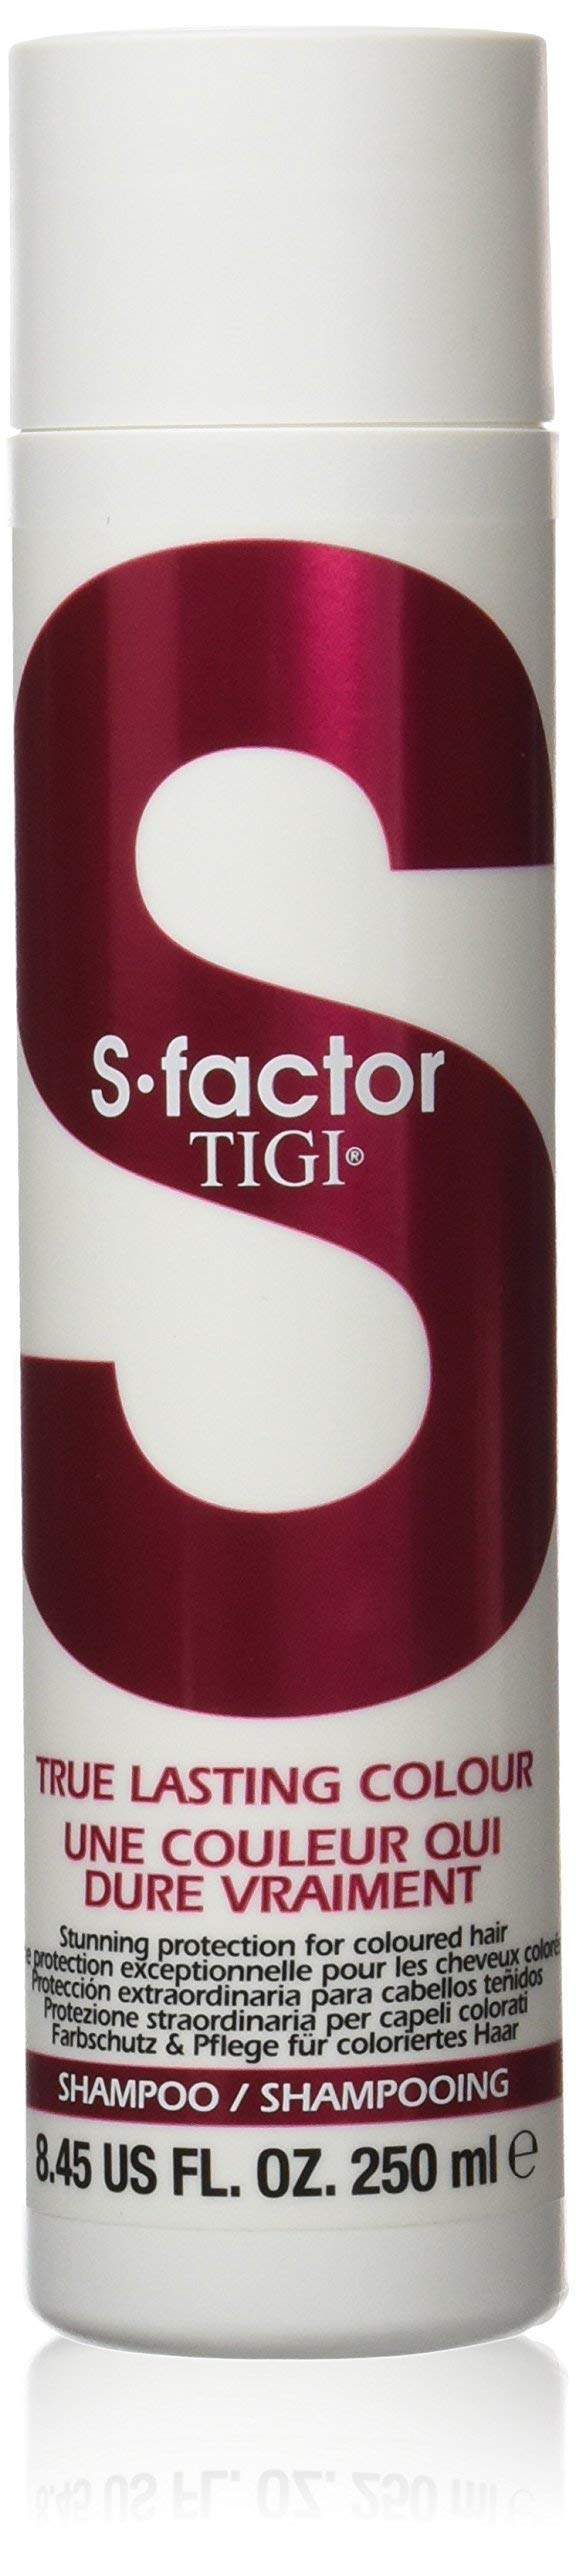 S FACTOR by TIGI True Lasting Colour Shampoo 250 ml